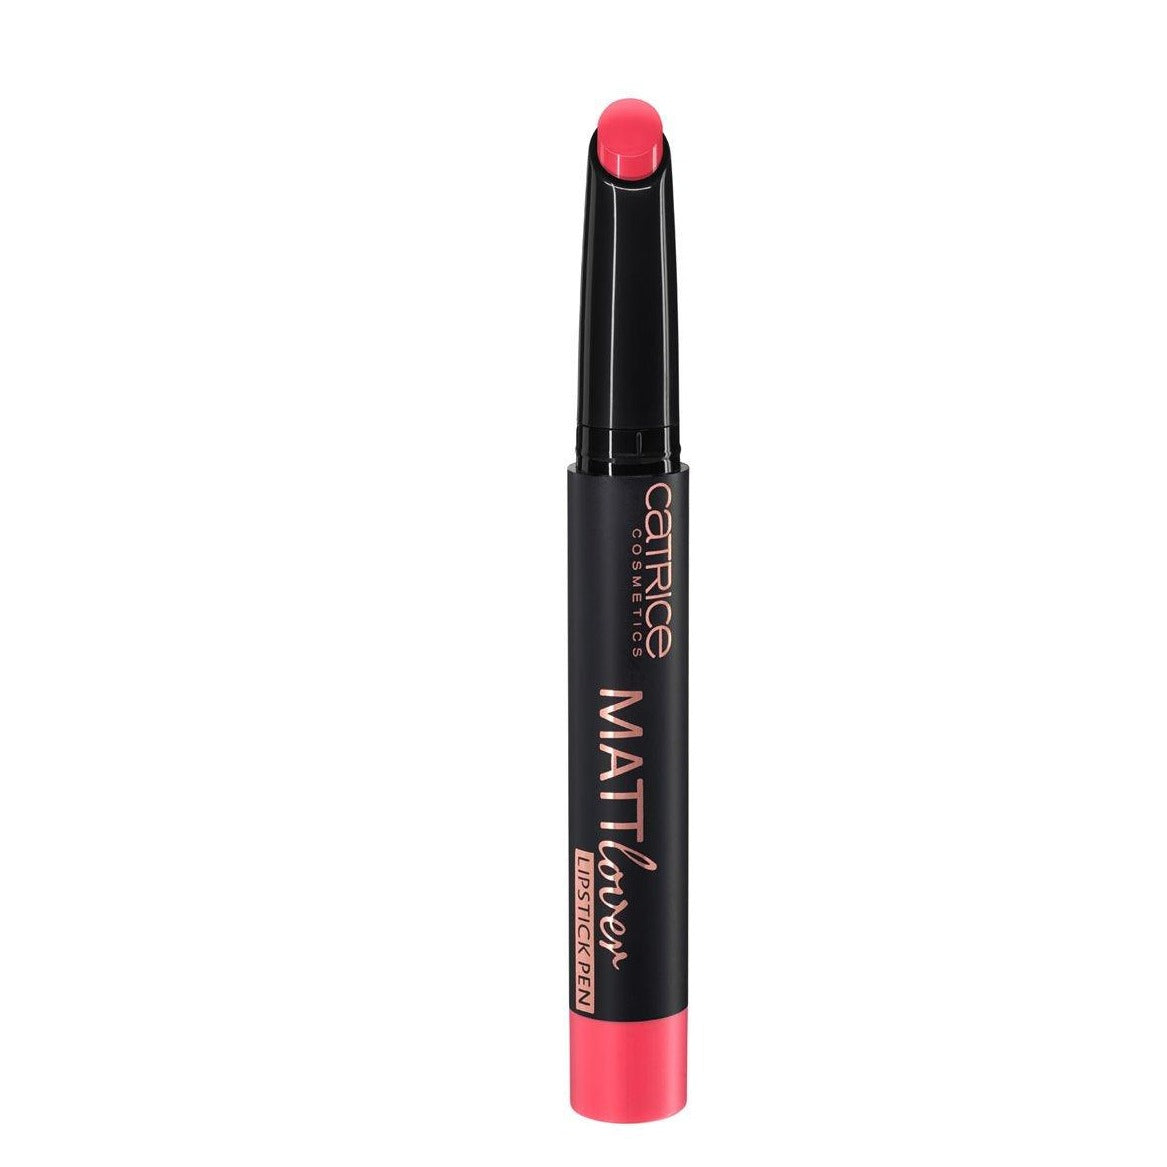 Catrice Mattlover Lipstick Pen 020 Tomato Red is Fab - Beauty Bounty